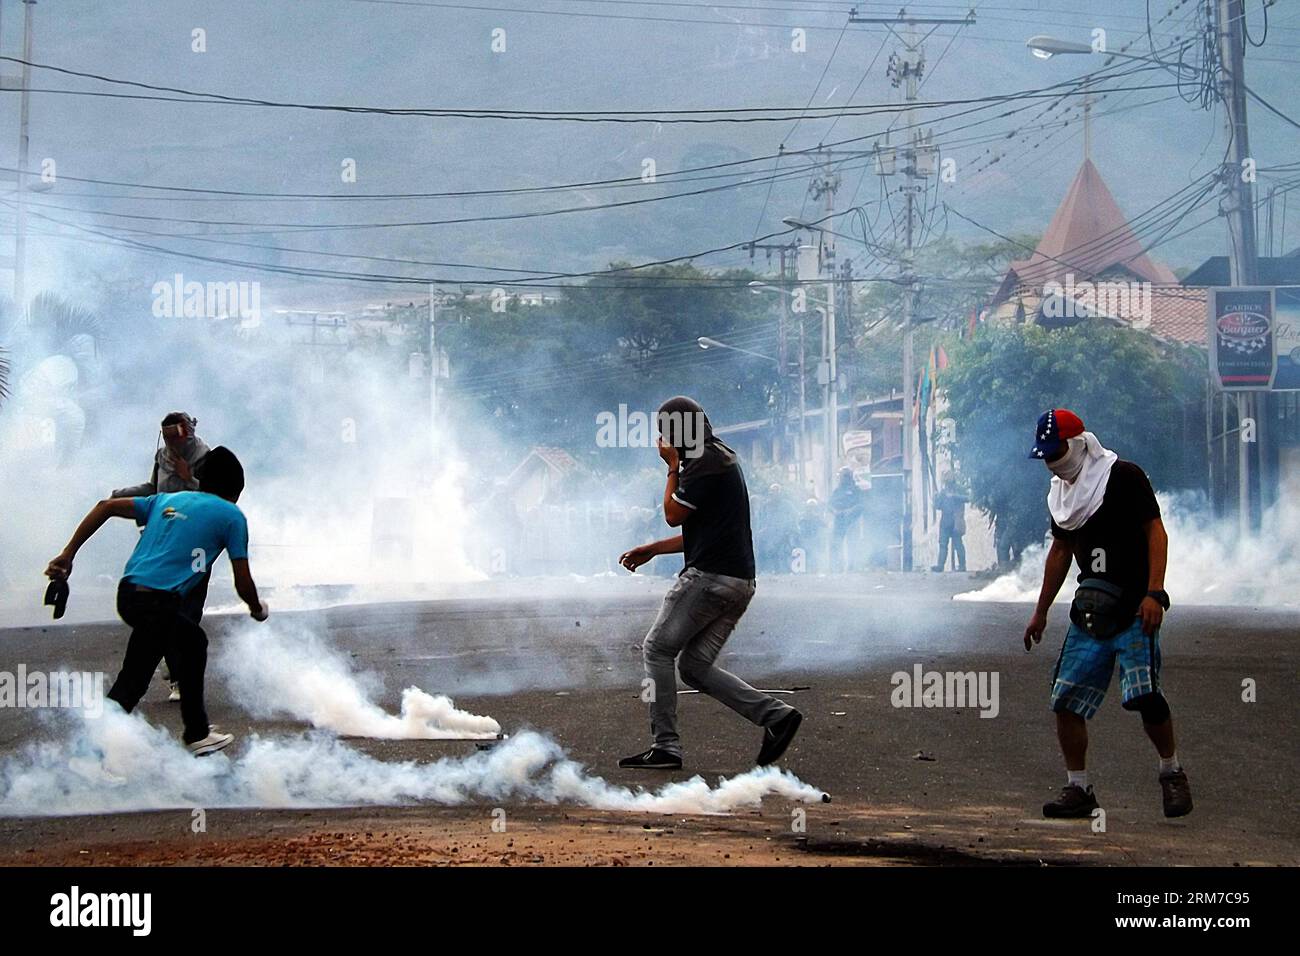 TACHIRA, Feb. 24, 2014 - Students clash with members of the National Bolivarian Guard during a protest in San Cristobal, Tachira state, Venezuela, on Feb. 24, 2014. (Xinhua/George Castro) (fnc) (sp) VENEZUELA-TACHIRA-SOCIETY-PROTEST PUBLICATIONxNOTxINxCHN   Tachira Feb 24 2014 Students Clash With Members of The National Bolivarian Guard during a Protest in San Cristobal Tachira State Venezuela ON Feb 24 2014 XINHUA George Castro FNC SP Venezuela Tachira Society Protest PUBLICATIONxNOTxINxCHN Stock Photo